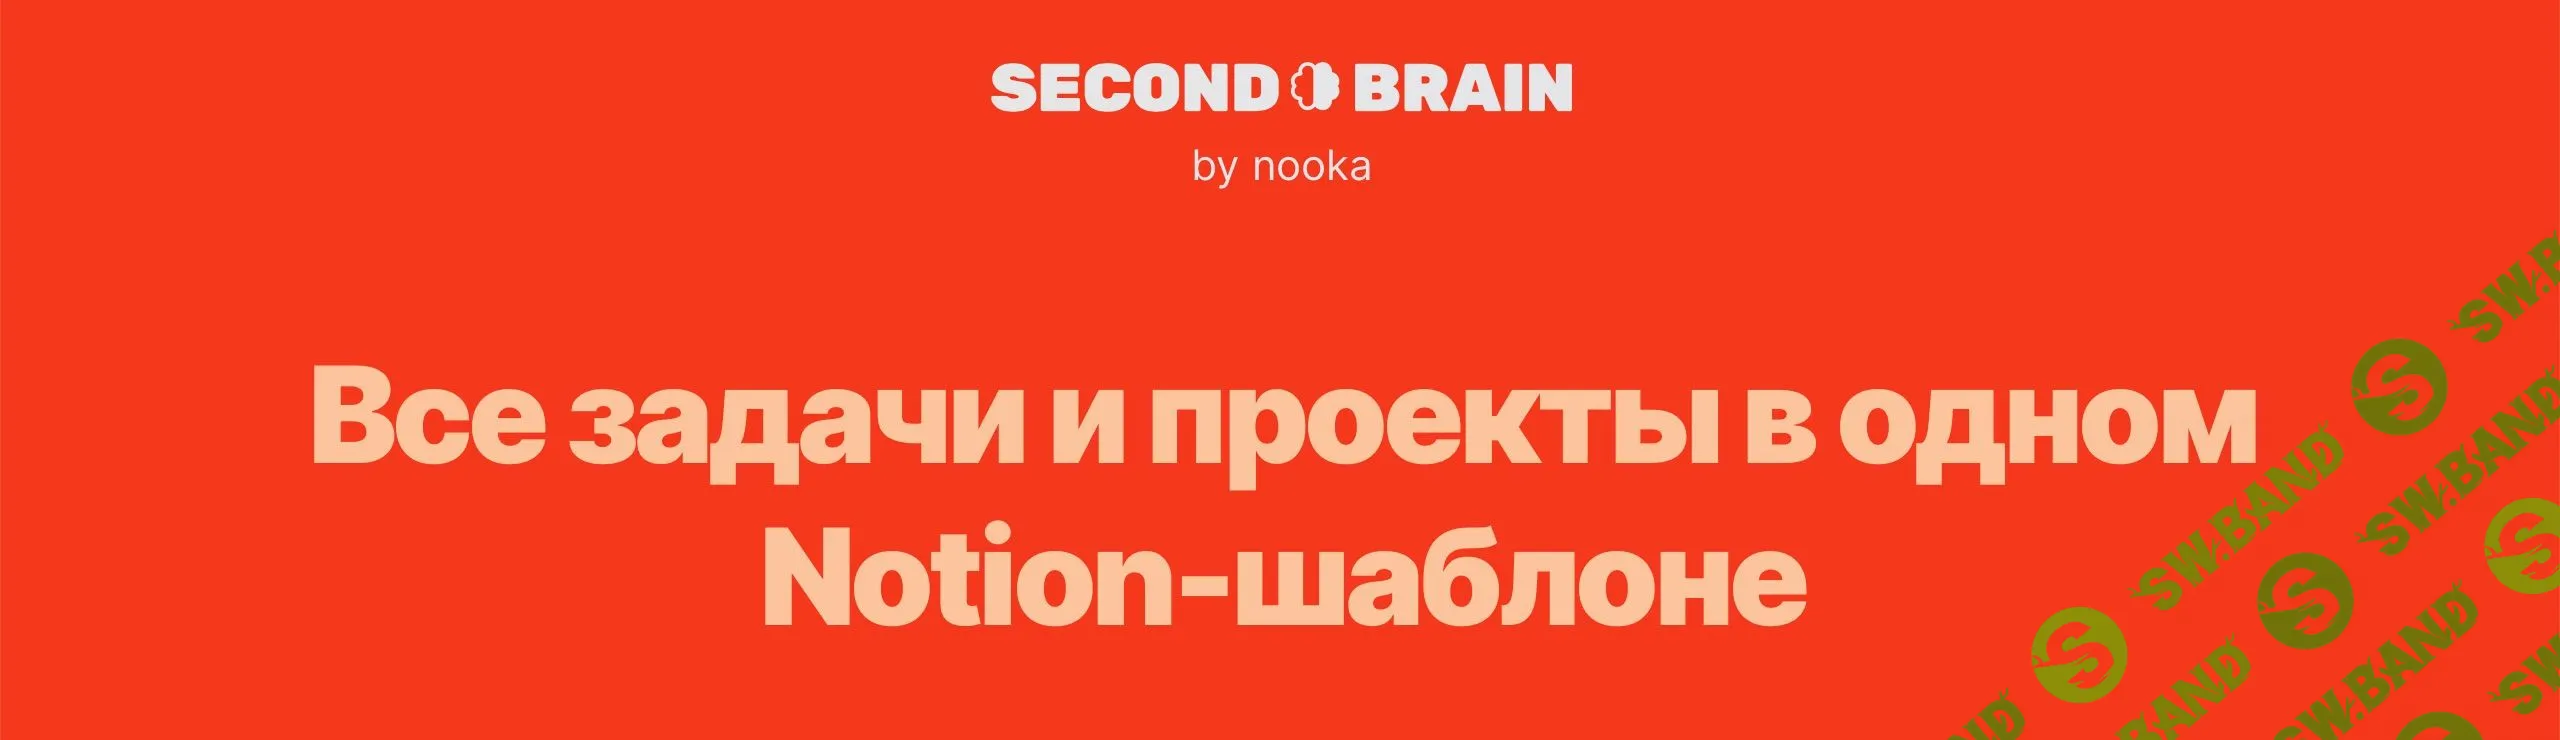 [Notion] Second Brain by nooka [nooka]